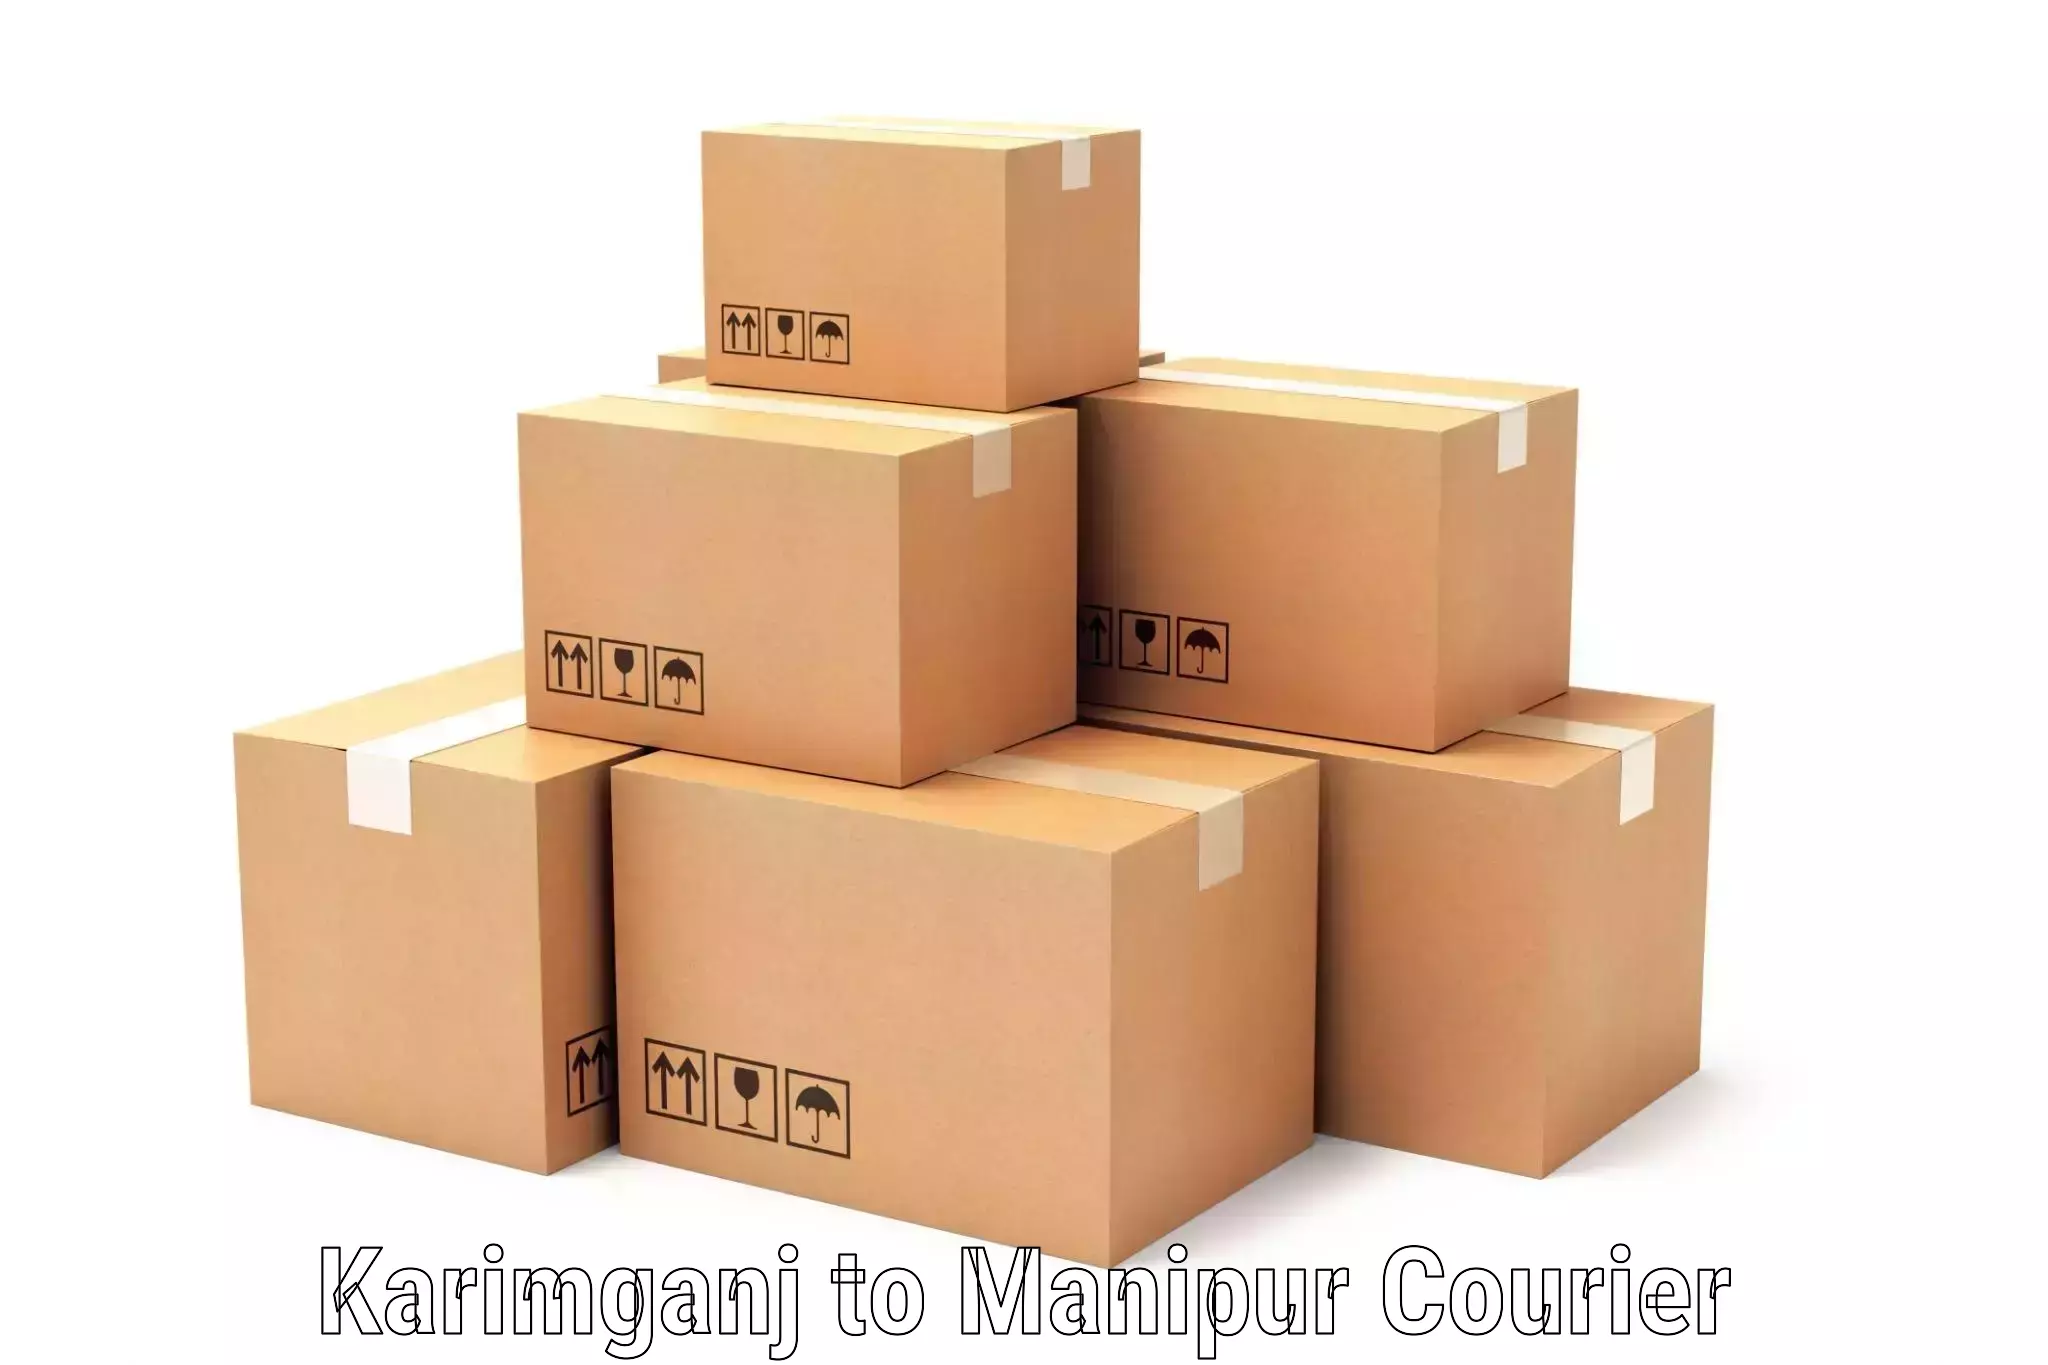 Full-service courier options Karimganj to Manipur